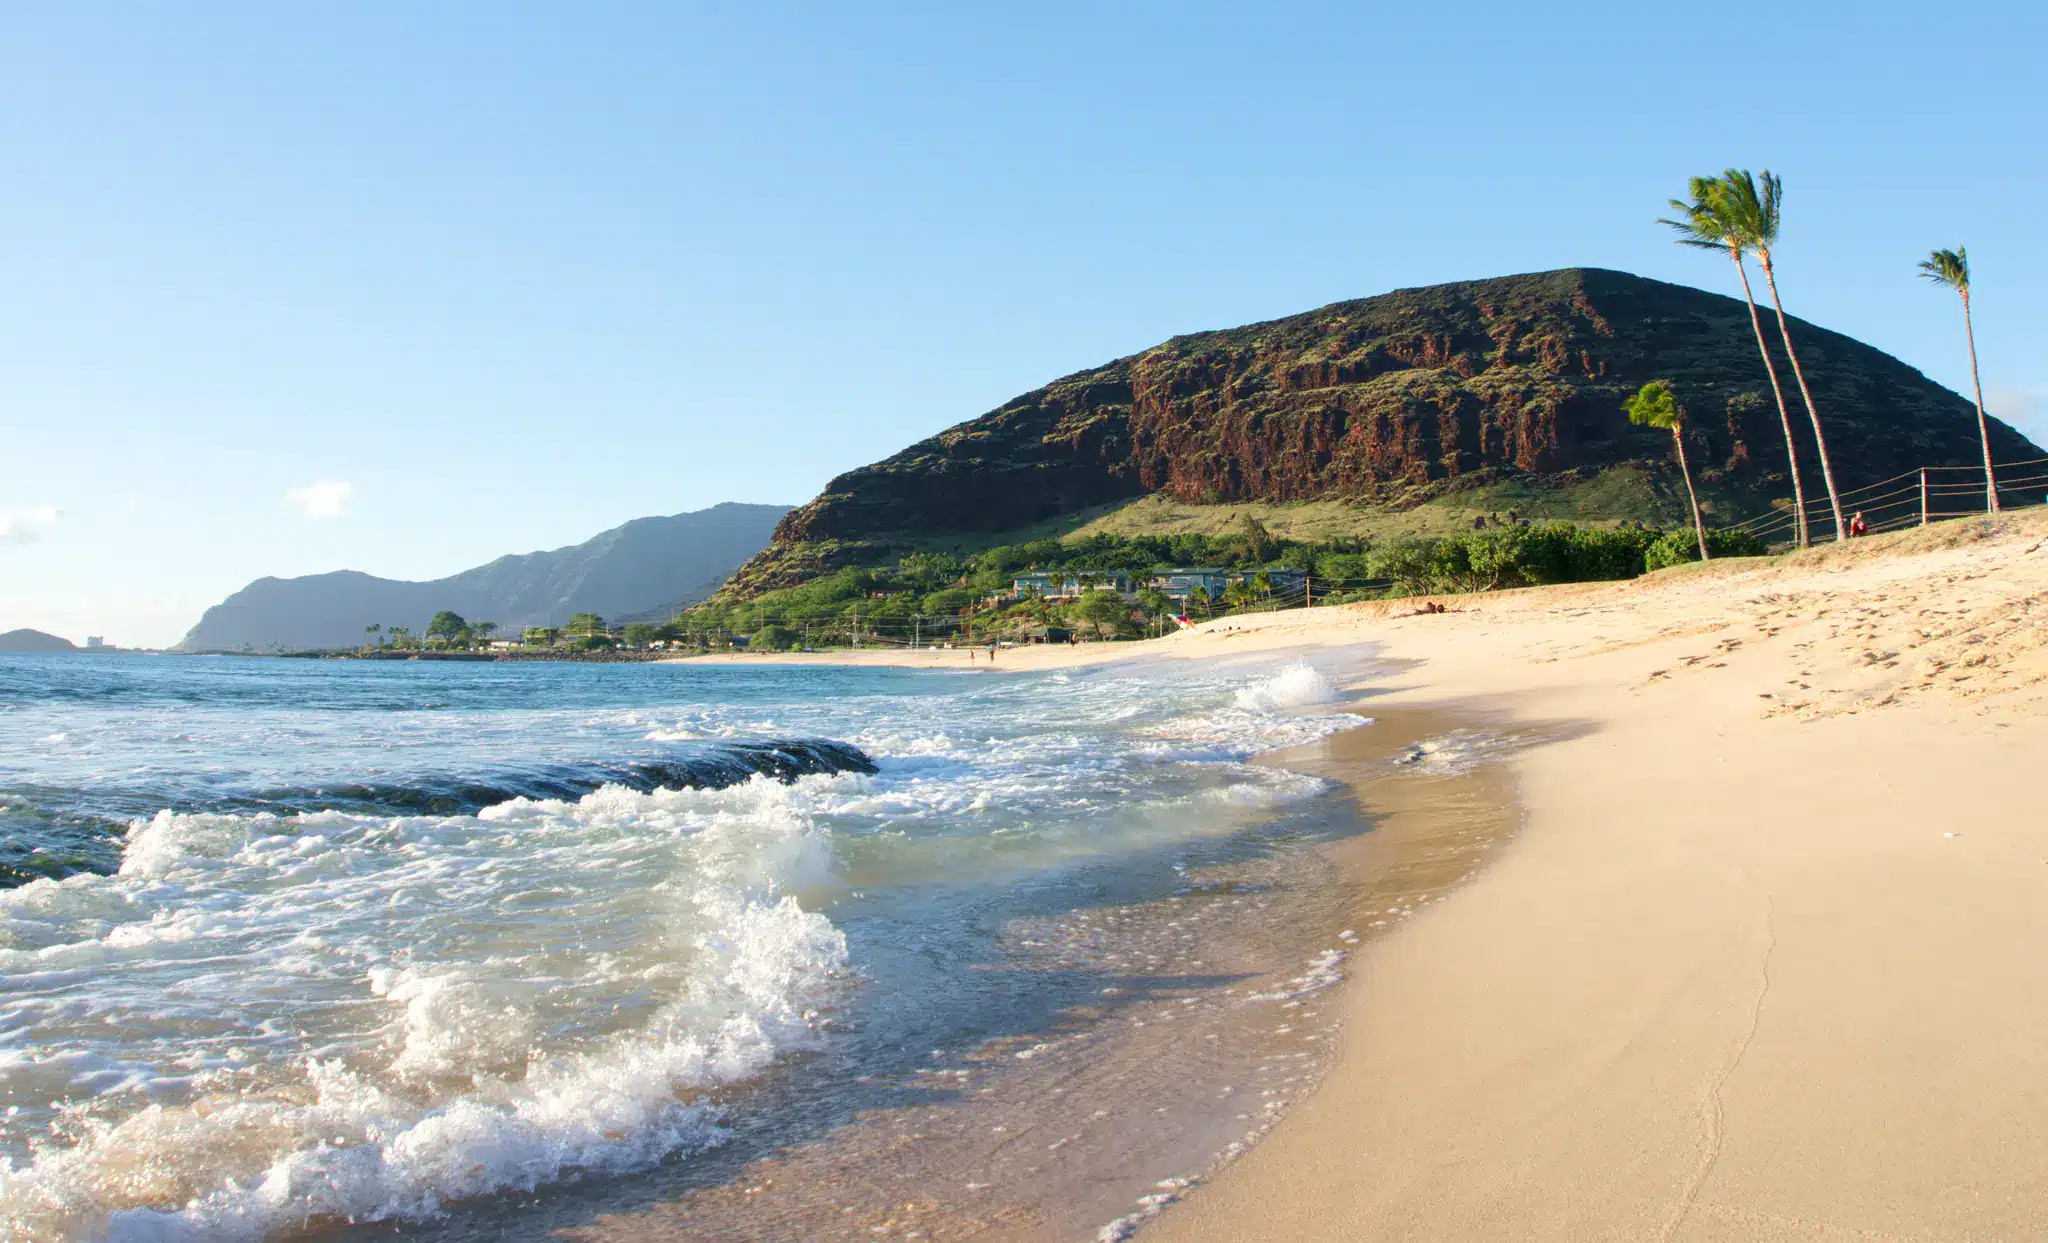 Ma'ili Beach Park is a Beach located in the city of Waianae on Oahu, Hawaii